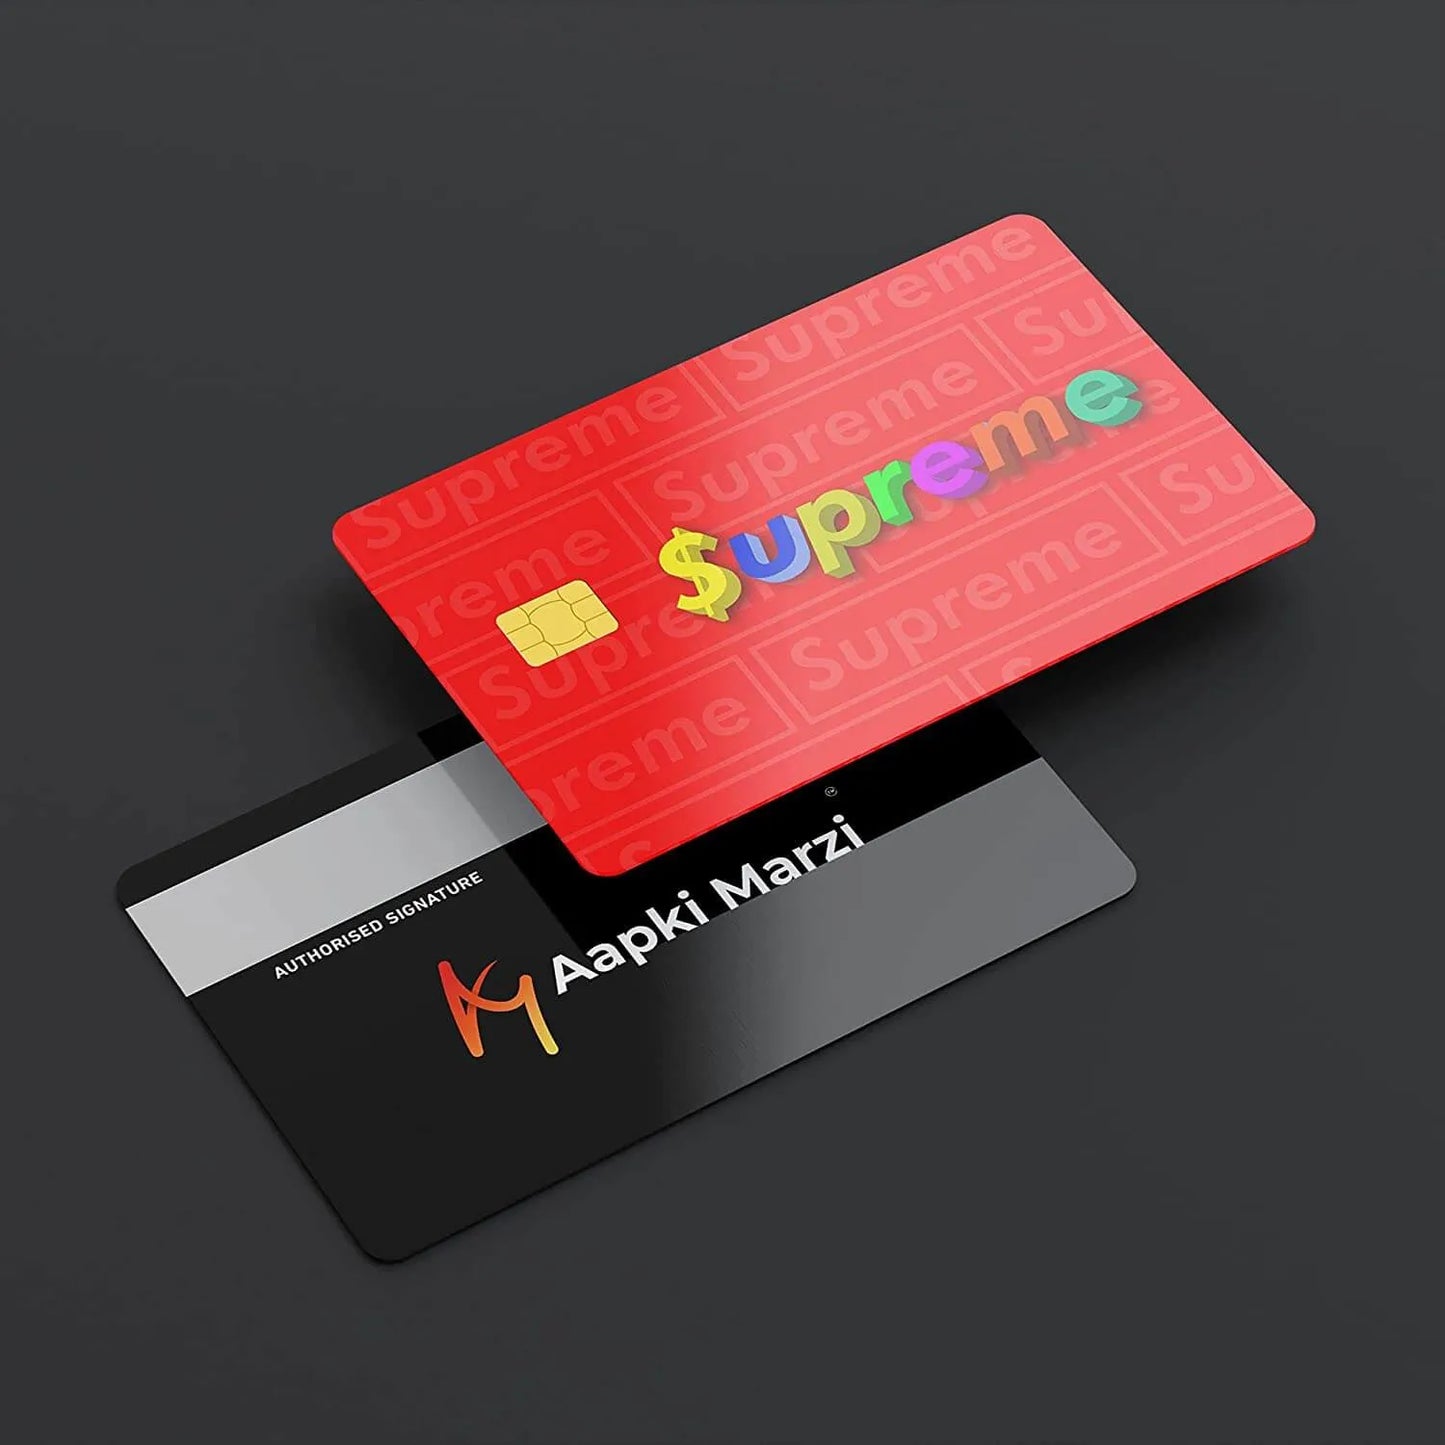 Supreme credit card skins